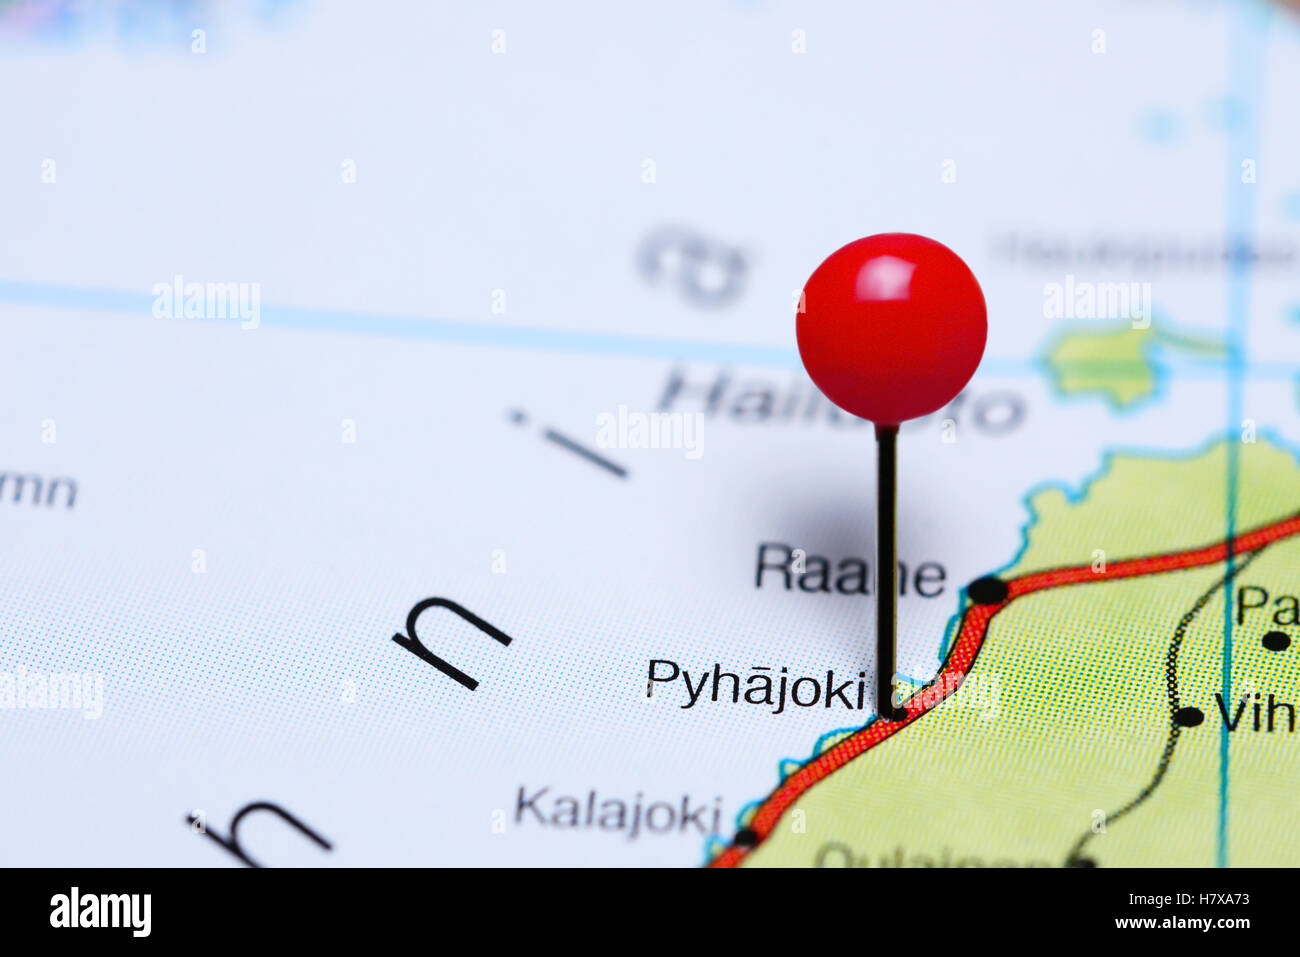 Pyhajoki pinned on a map of Finland Stock Photo